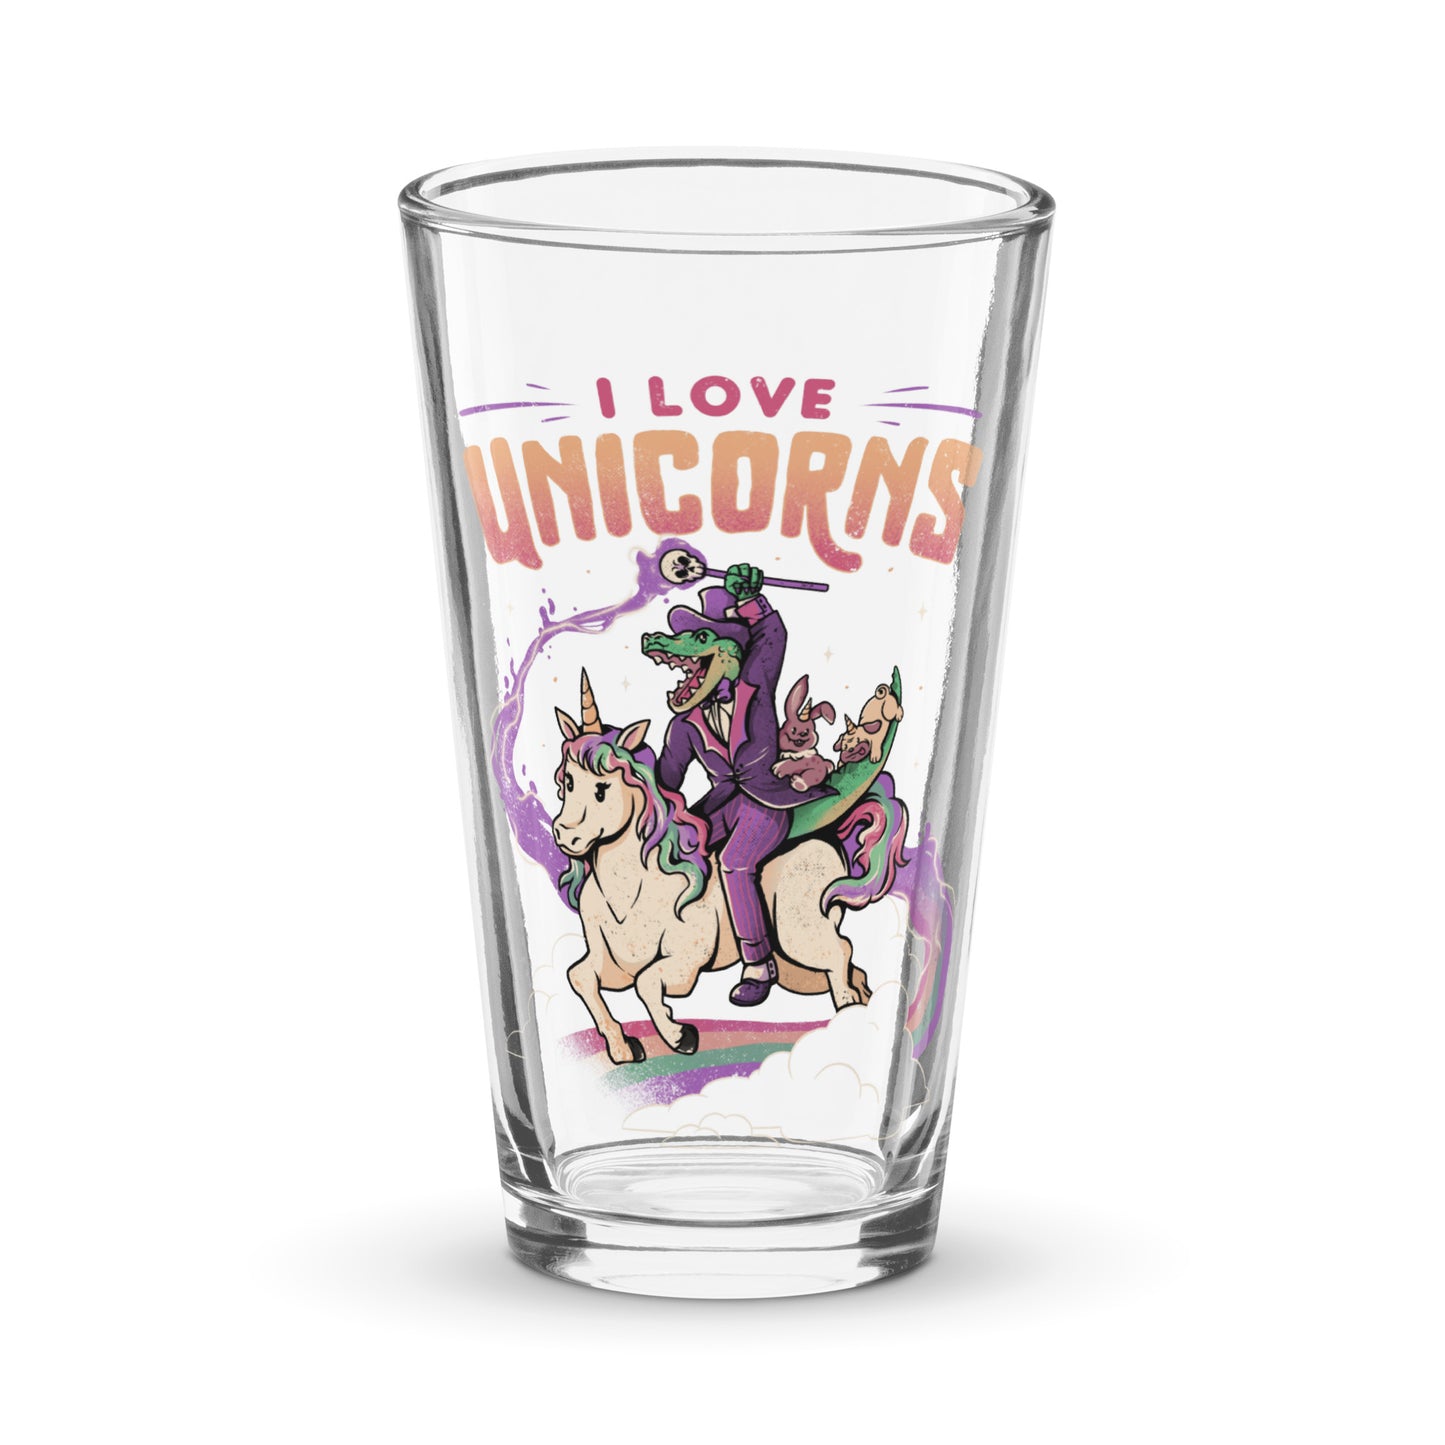 I Love Unicorns - Pint Glass